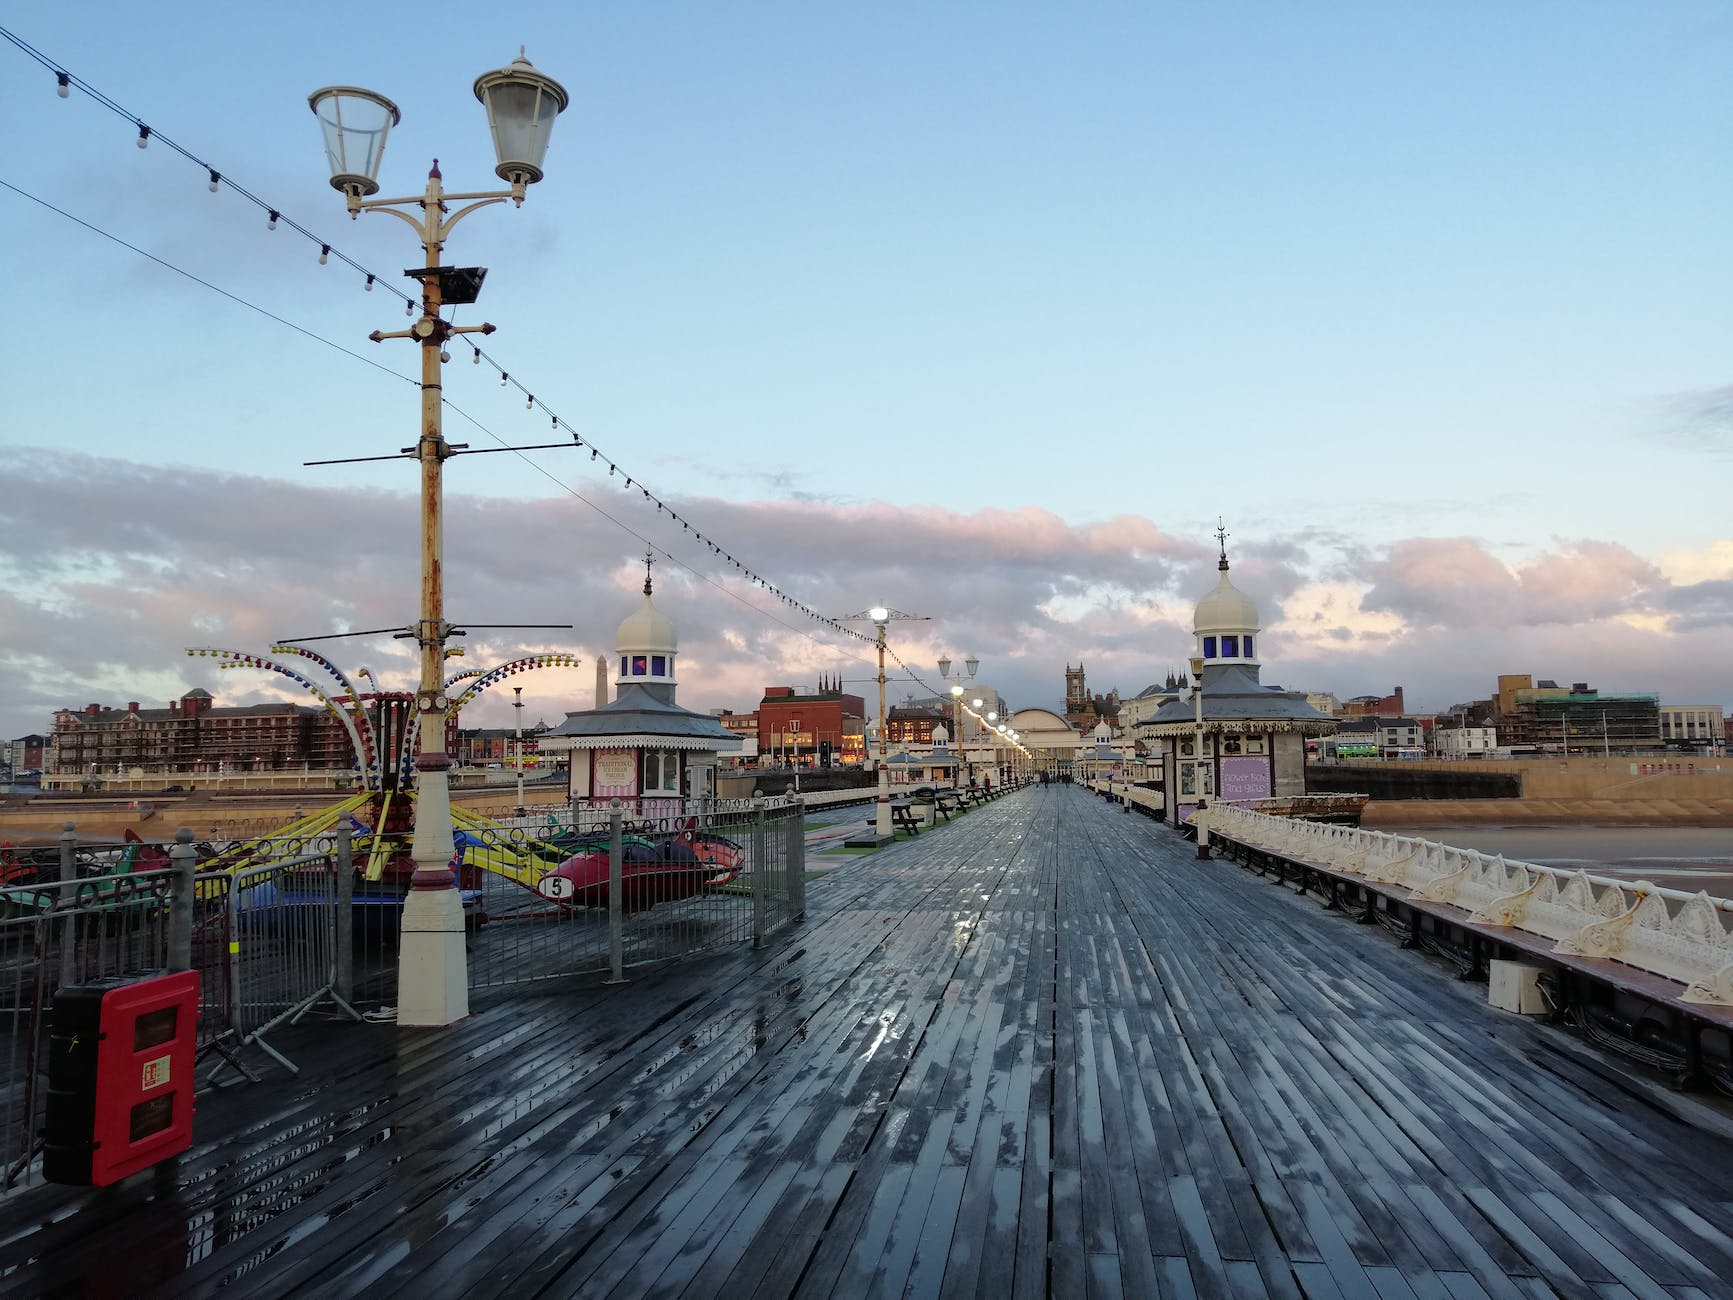 a pier with an amusement ride